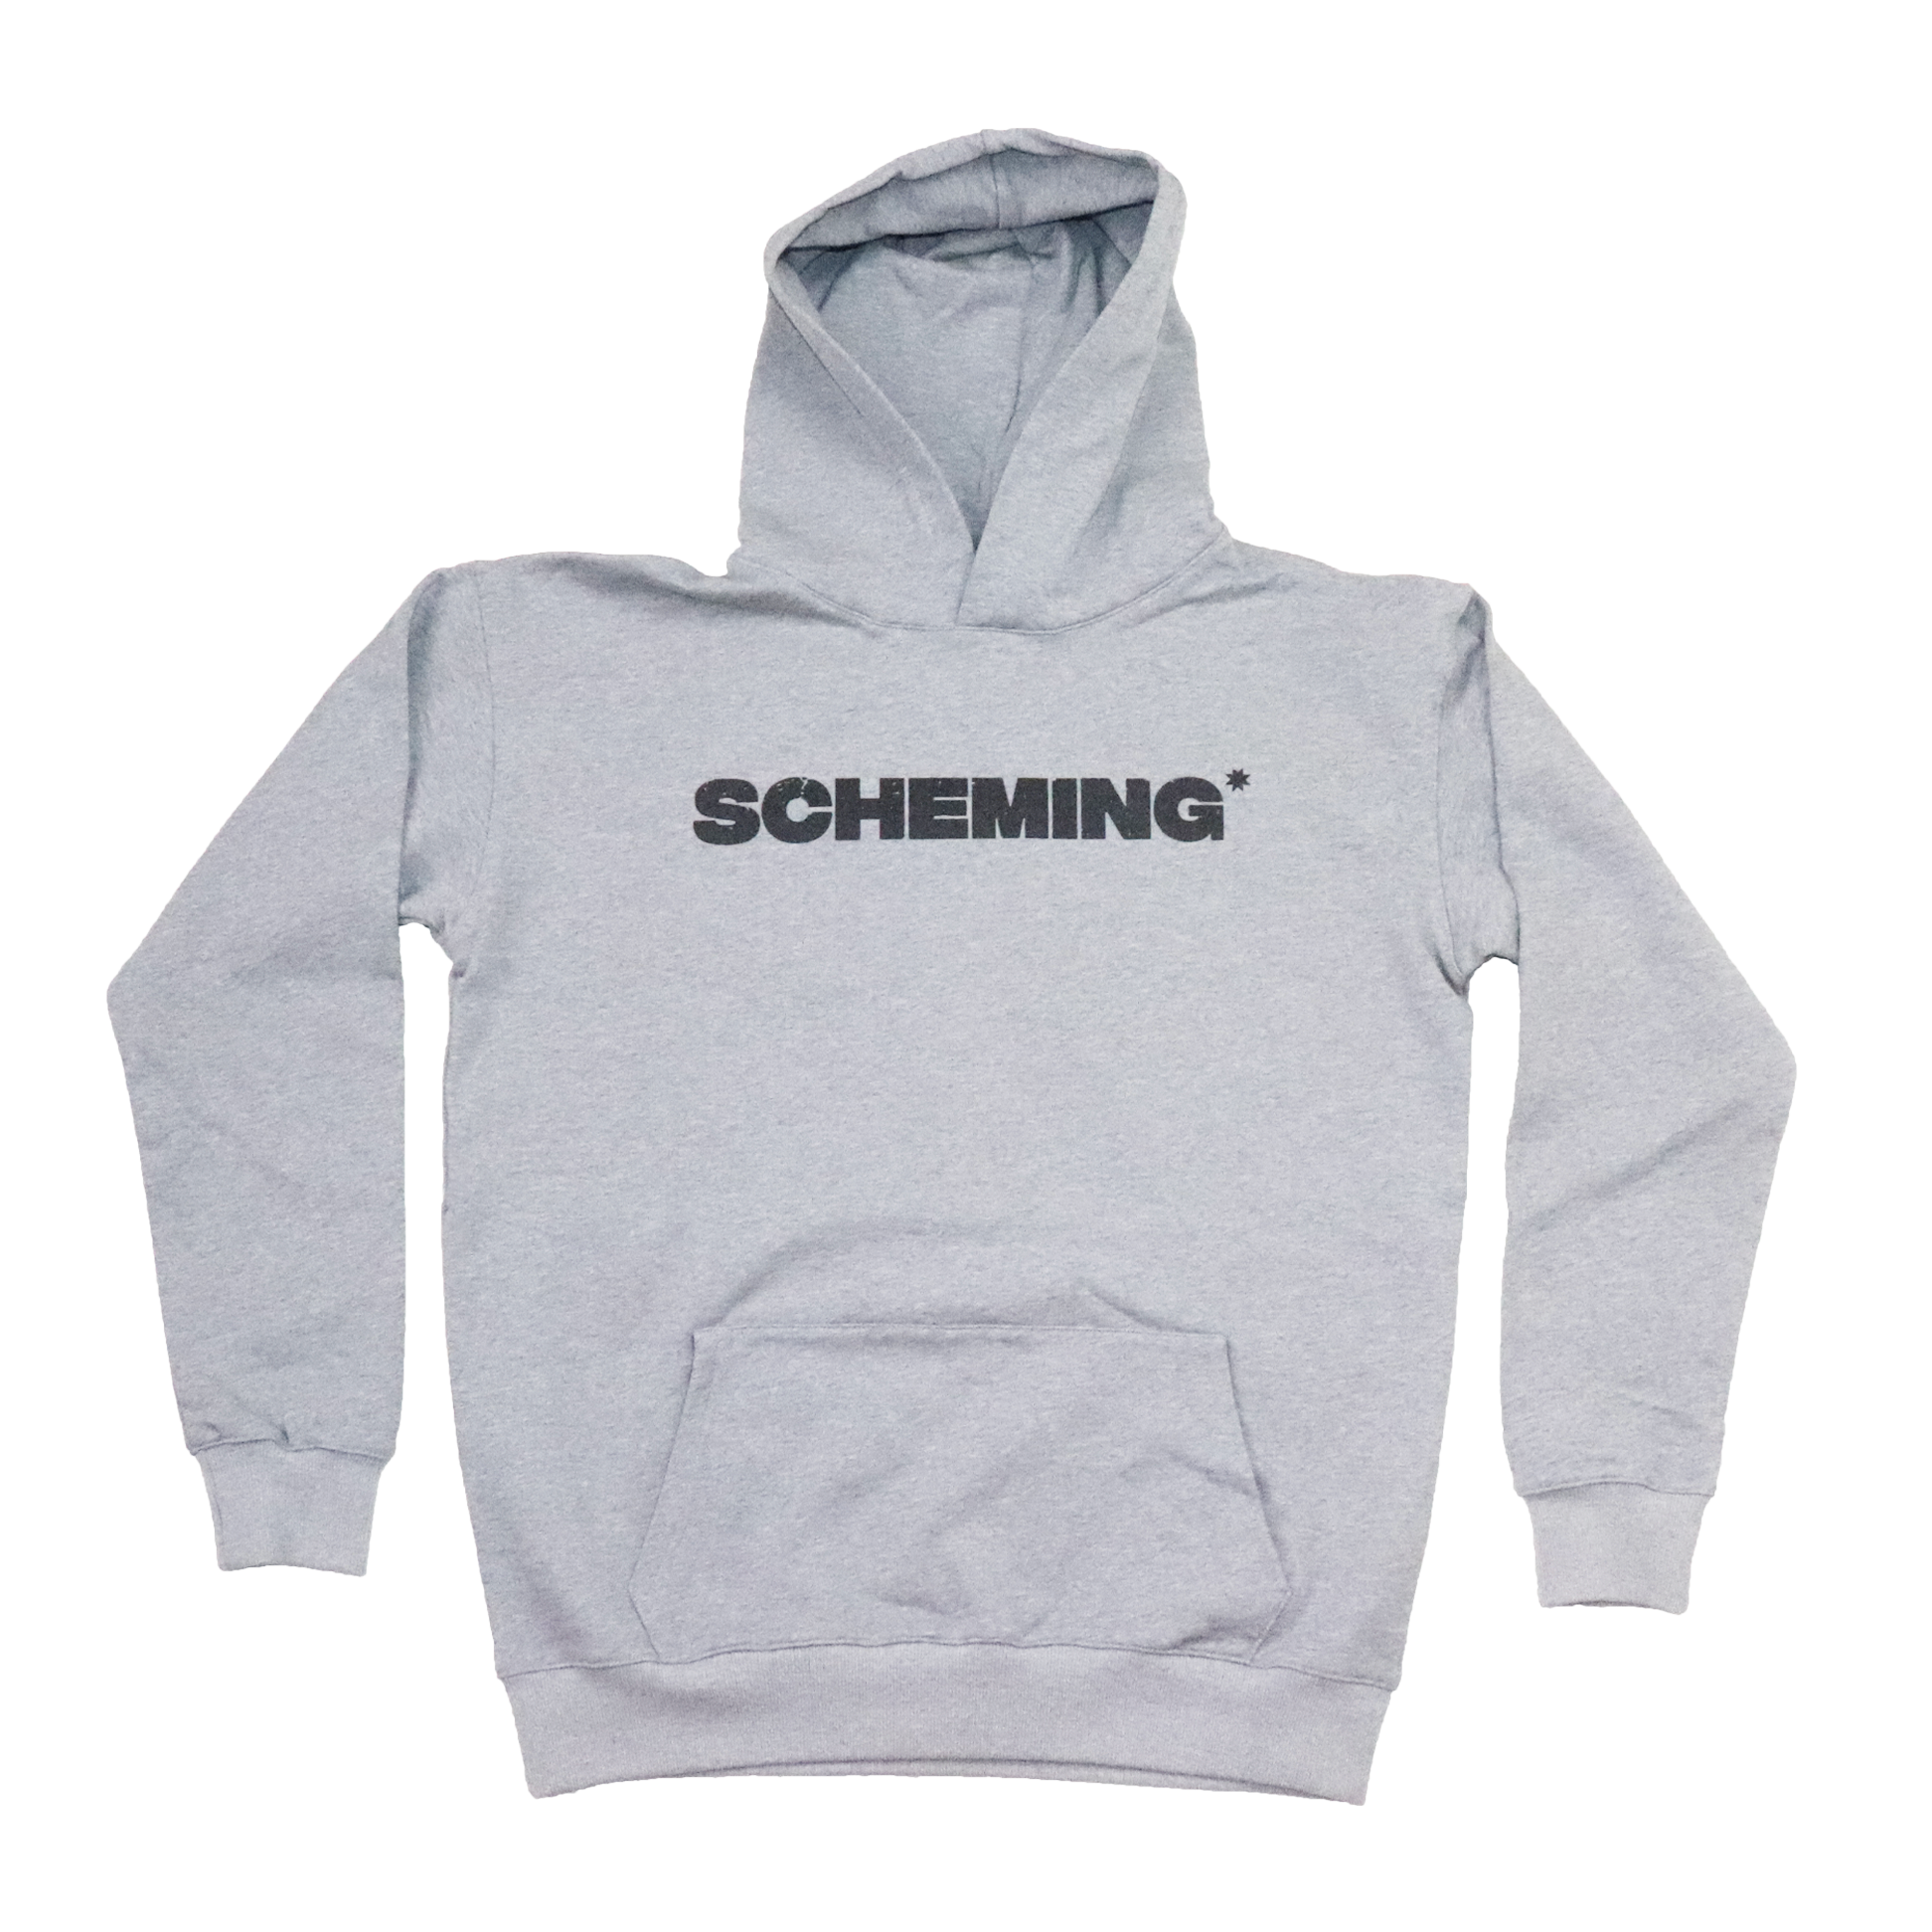 Eye for an eye hoodie - Scheming Co.